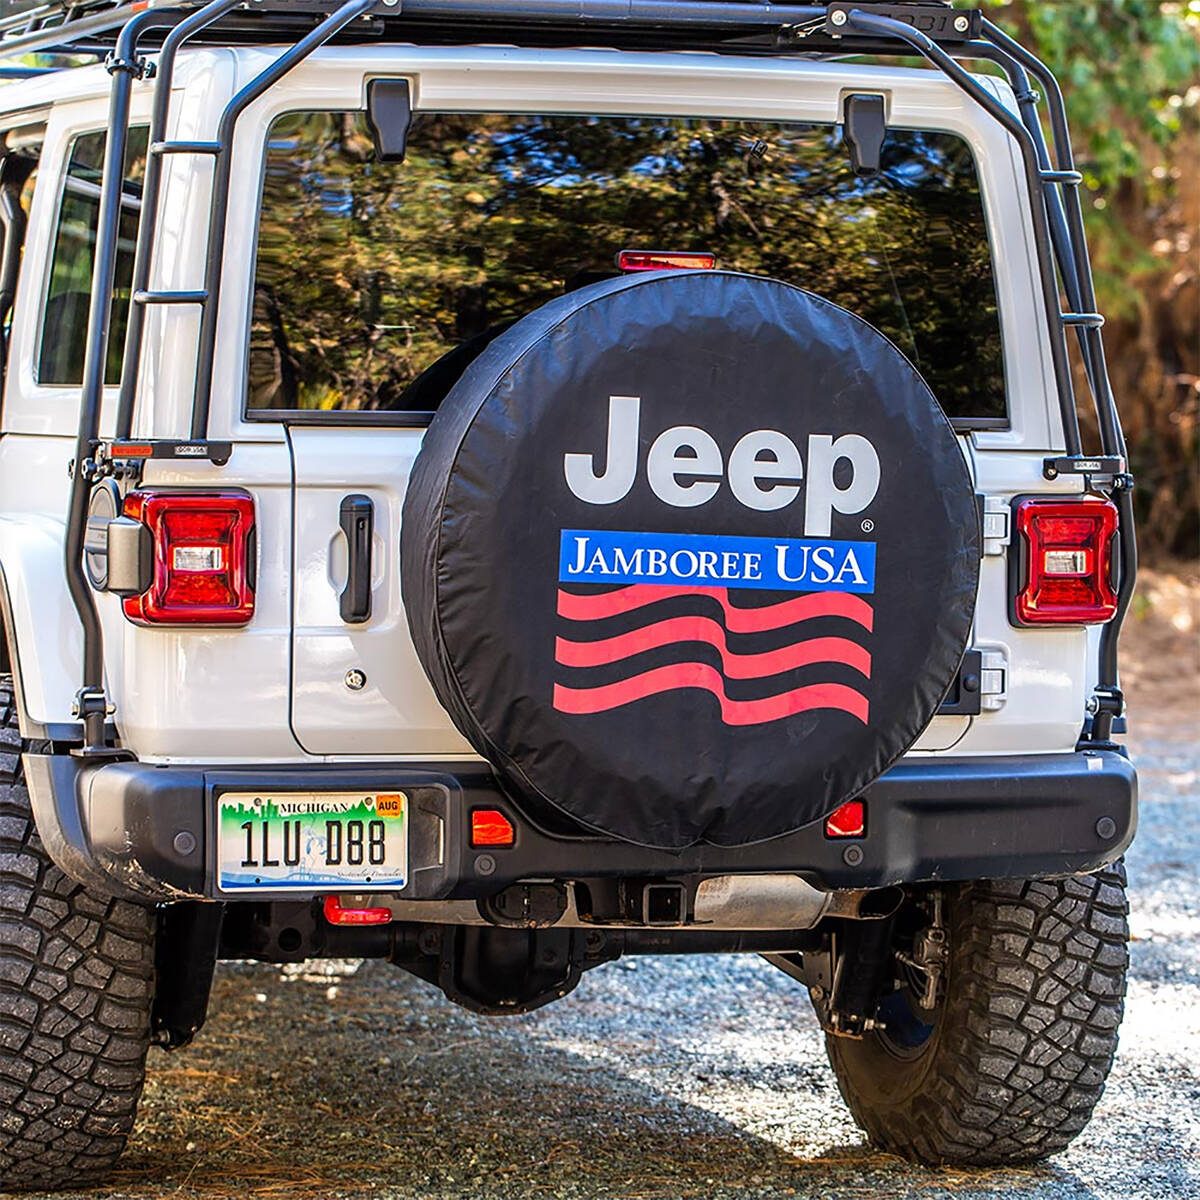 Jeep Jamboree USA The 4th annual ‘Jeep Jamboree’ adventure returns to Death Valley beginnin ...